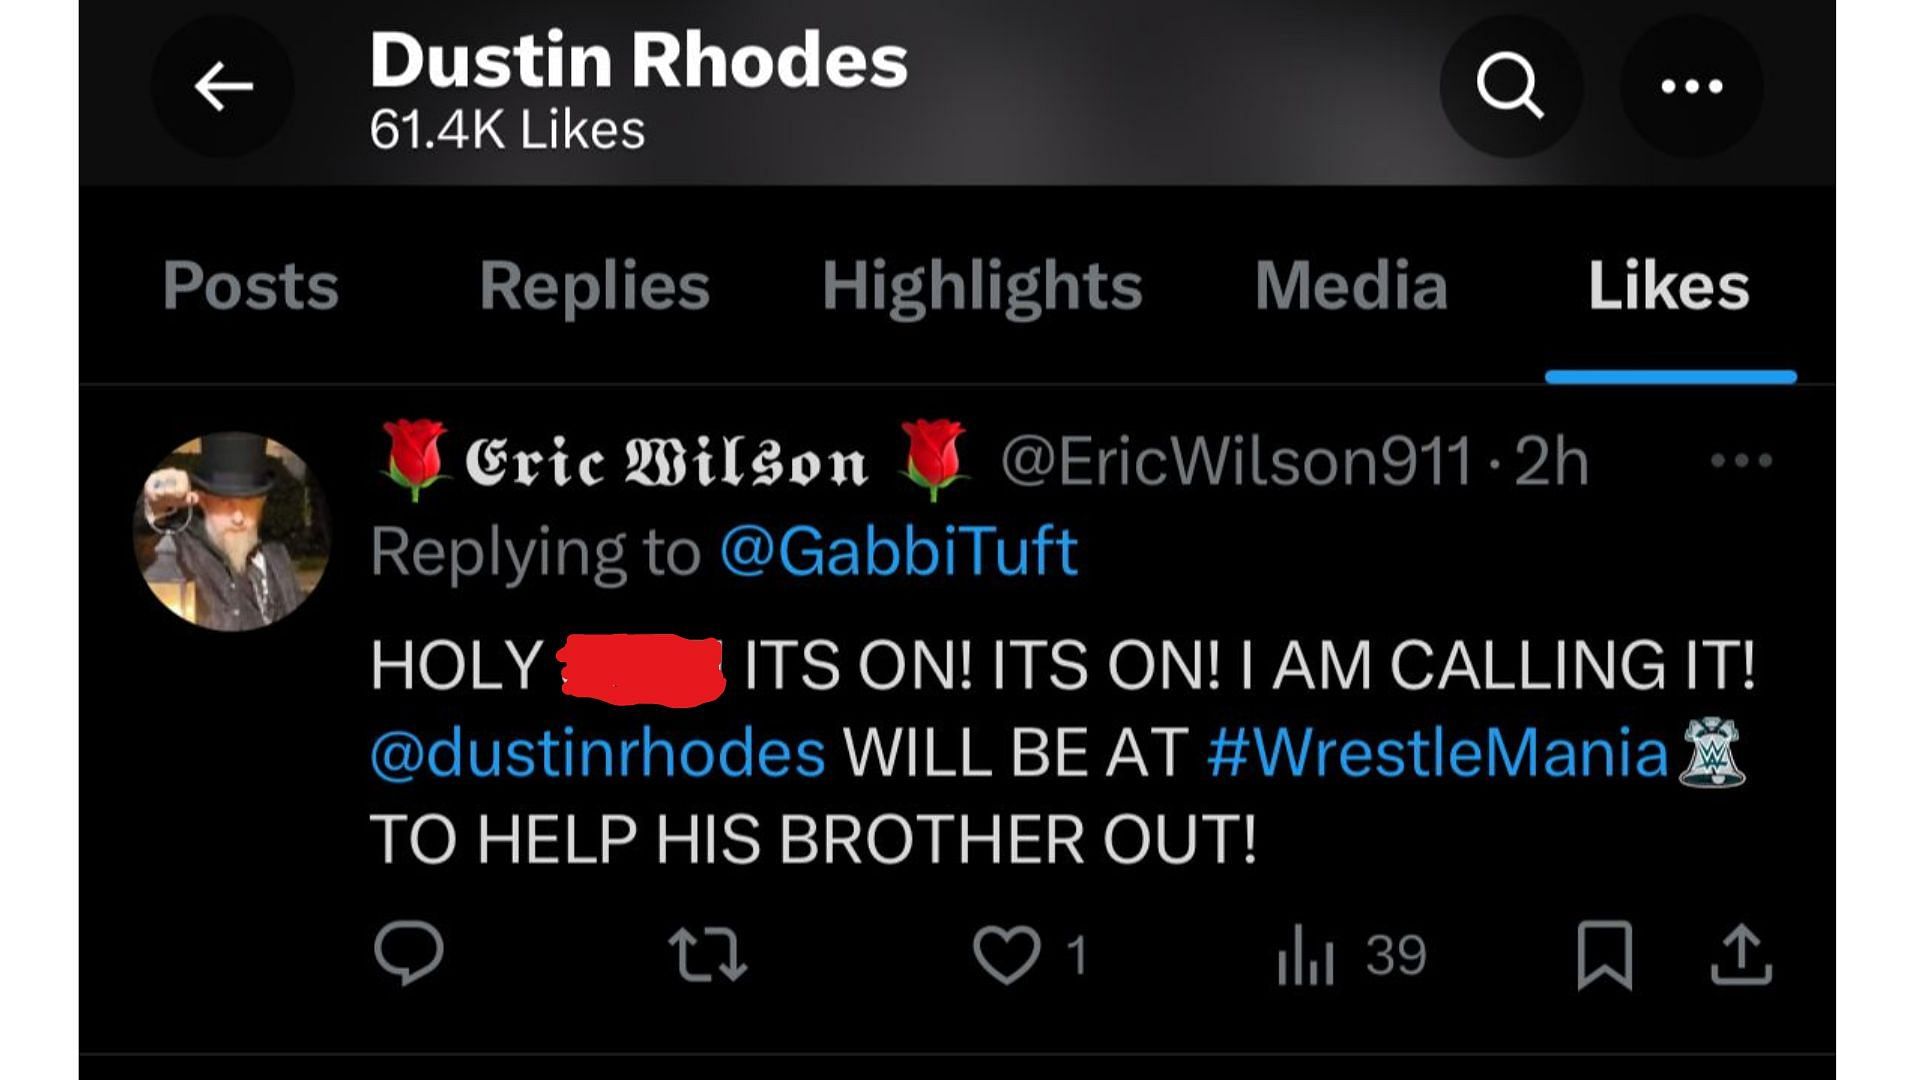 Dustin Rhodes liked an interesting tweet regarding an appearance at WrestleMania XL